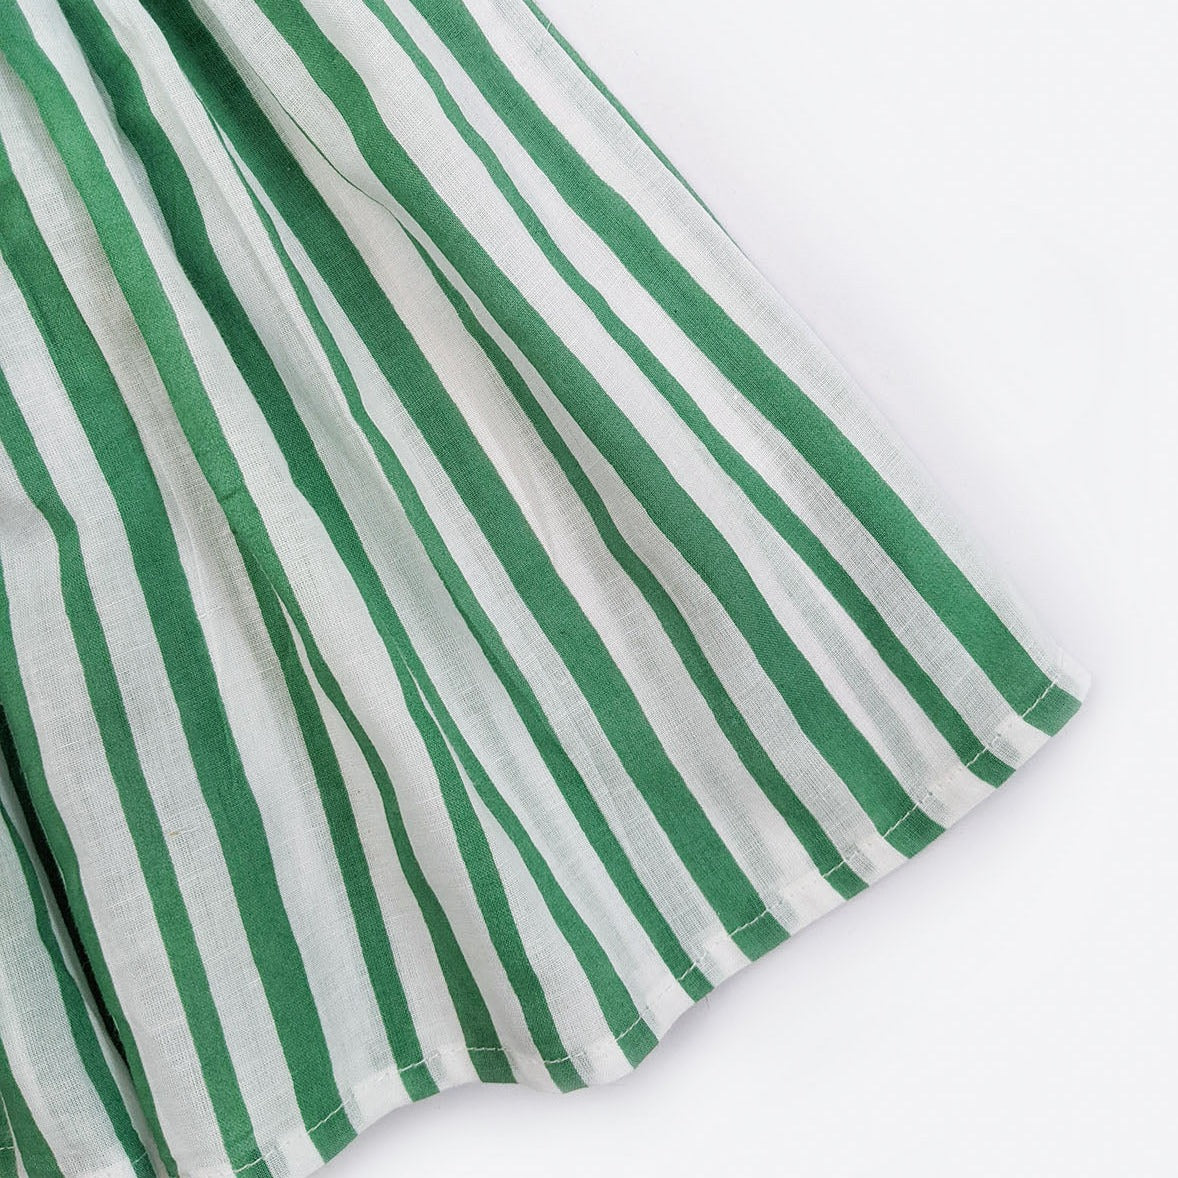 Raina - Fresh Green Tiny Frilled Striped Long Dress